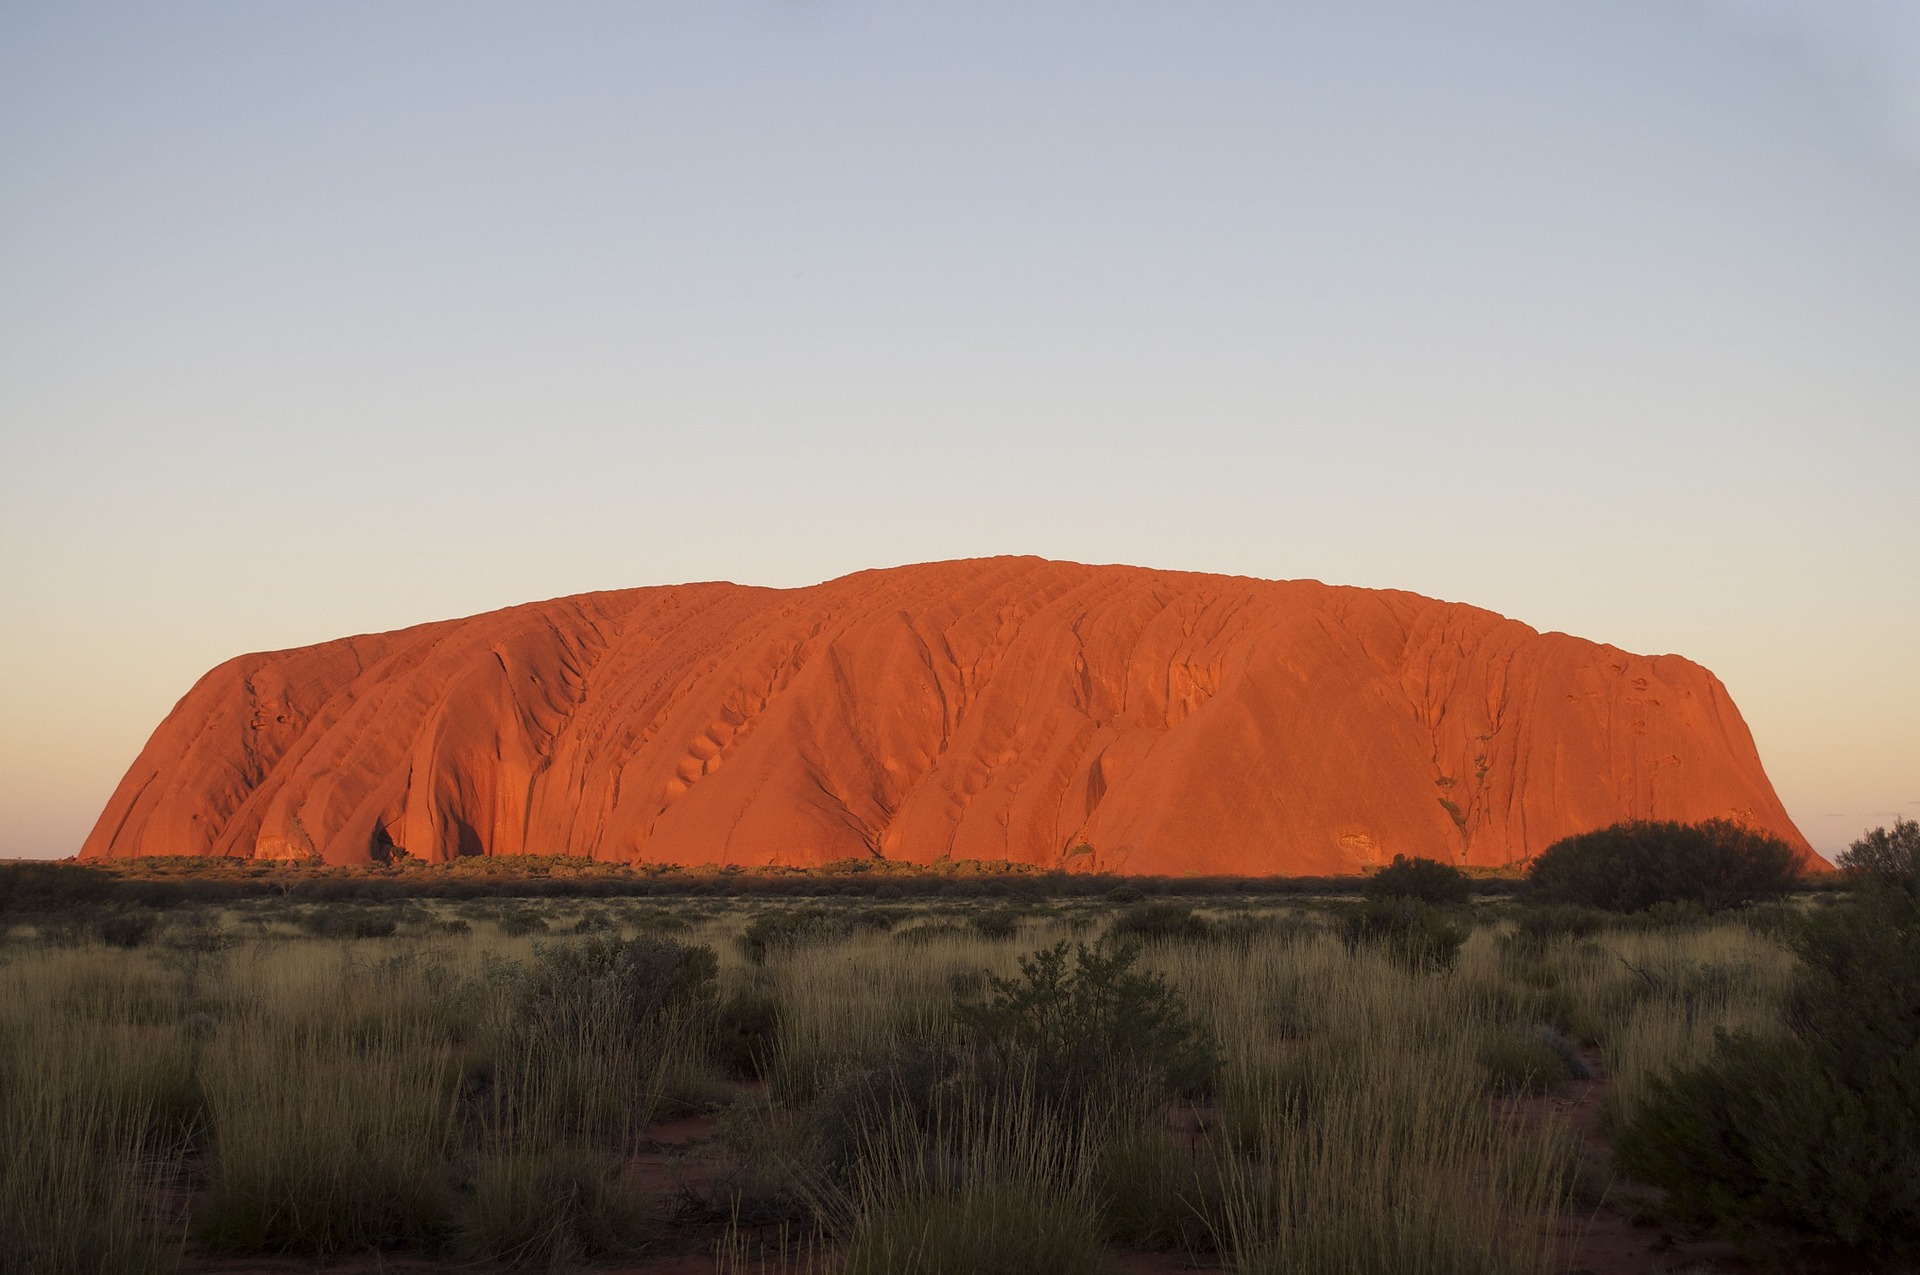 Uluru (Ayers Rock), Australia